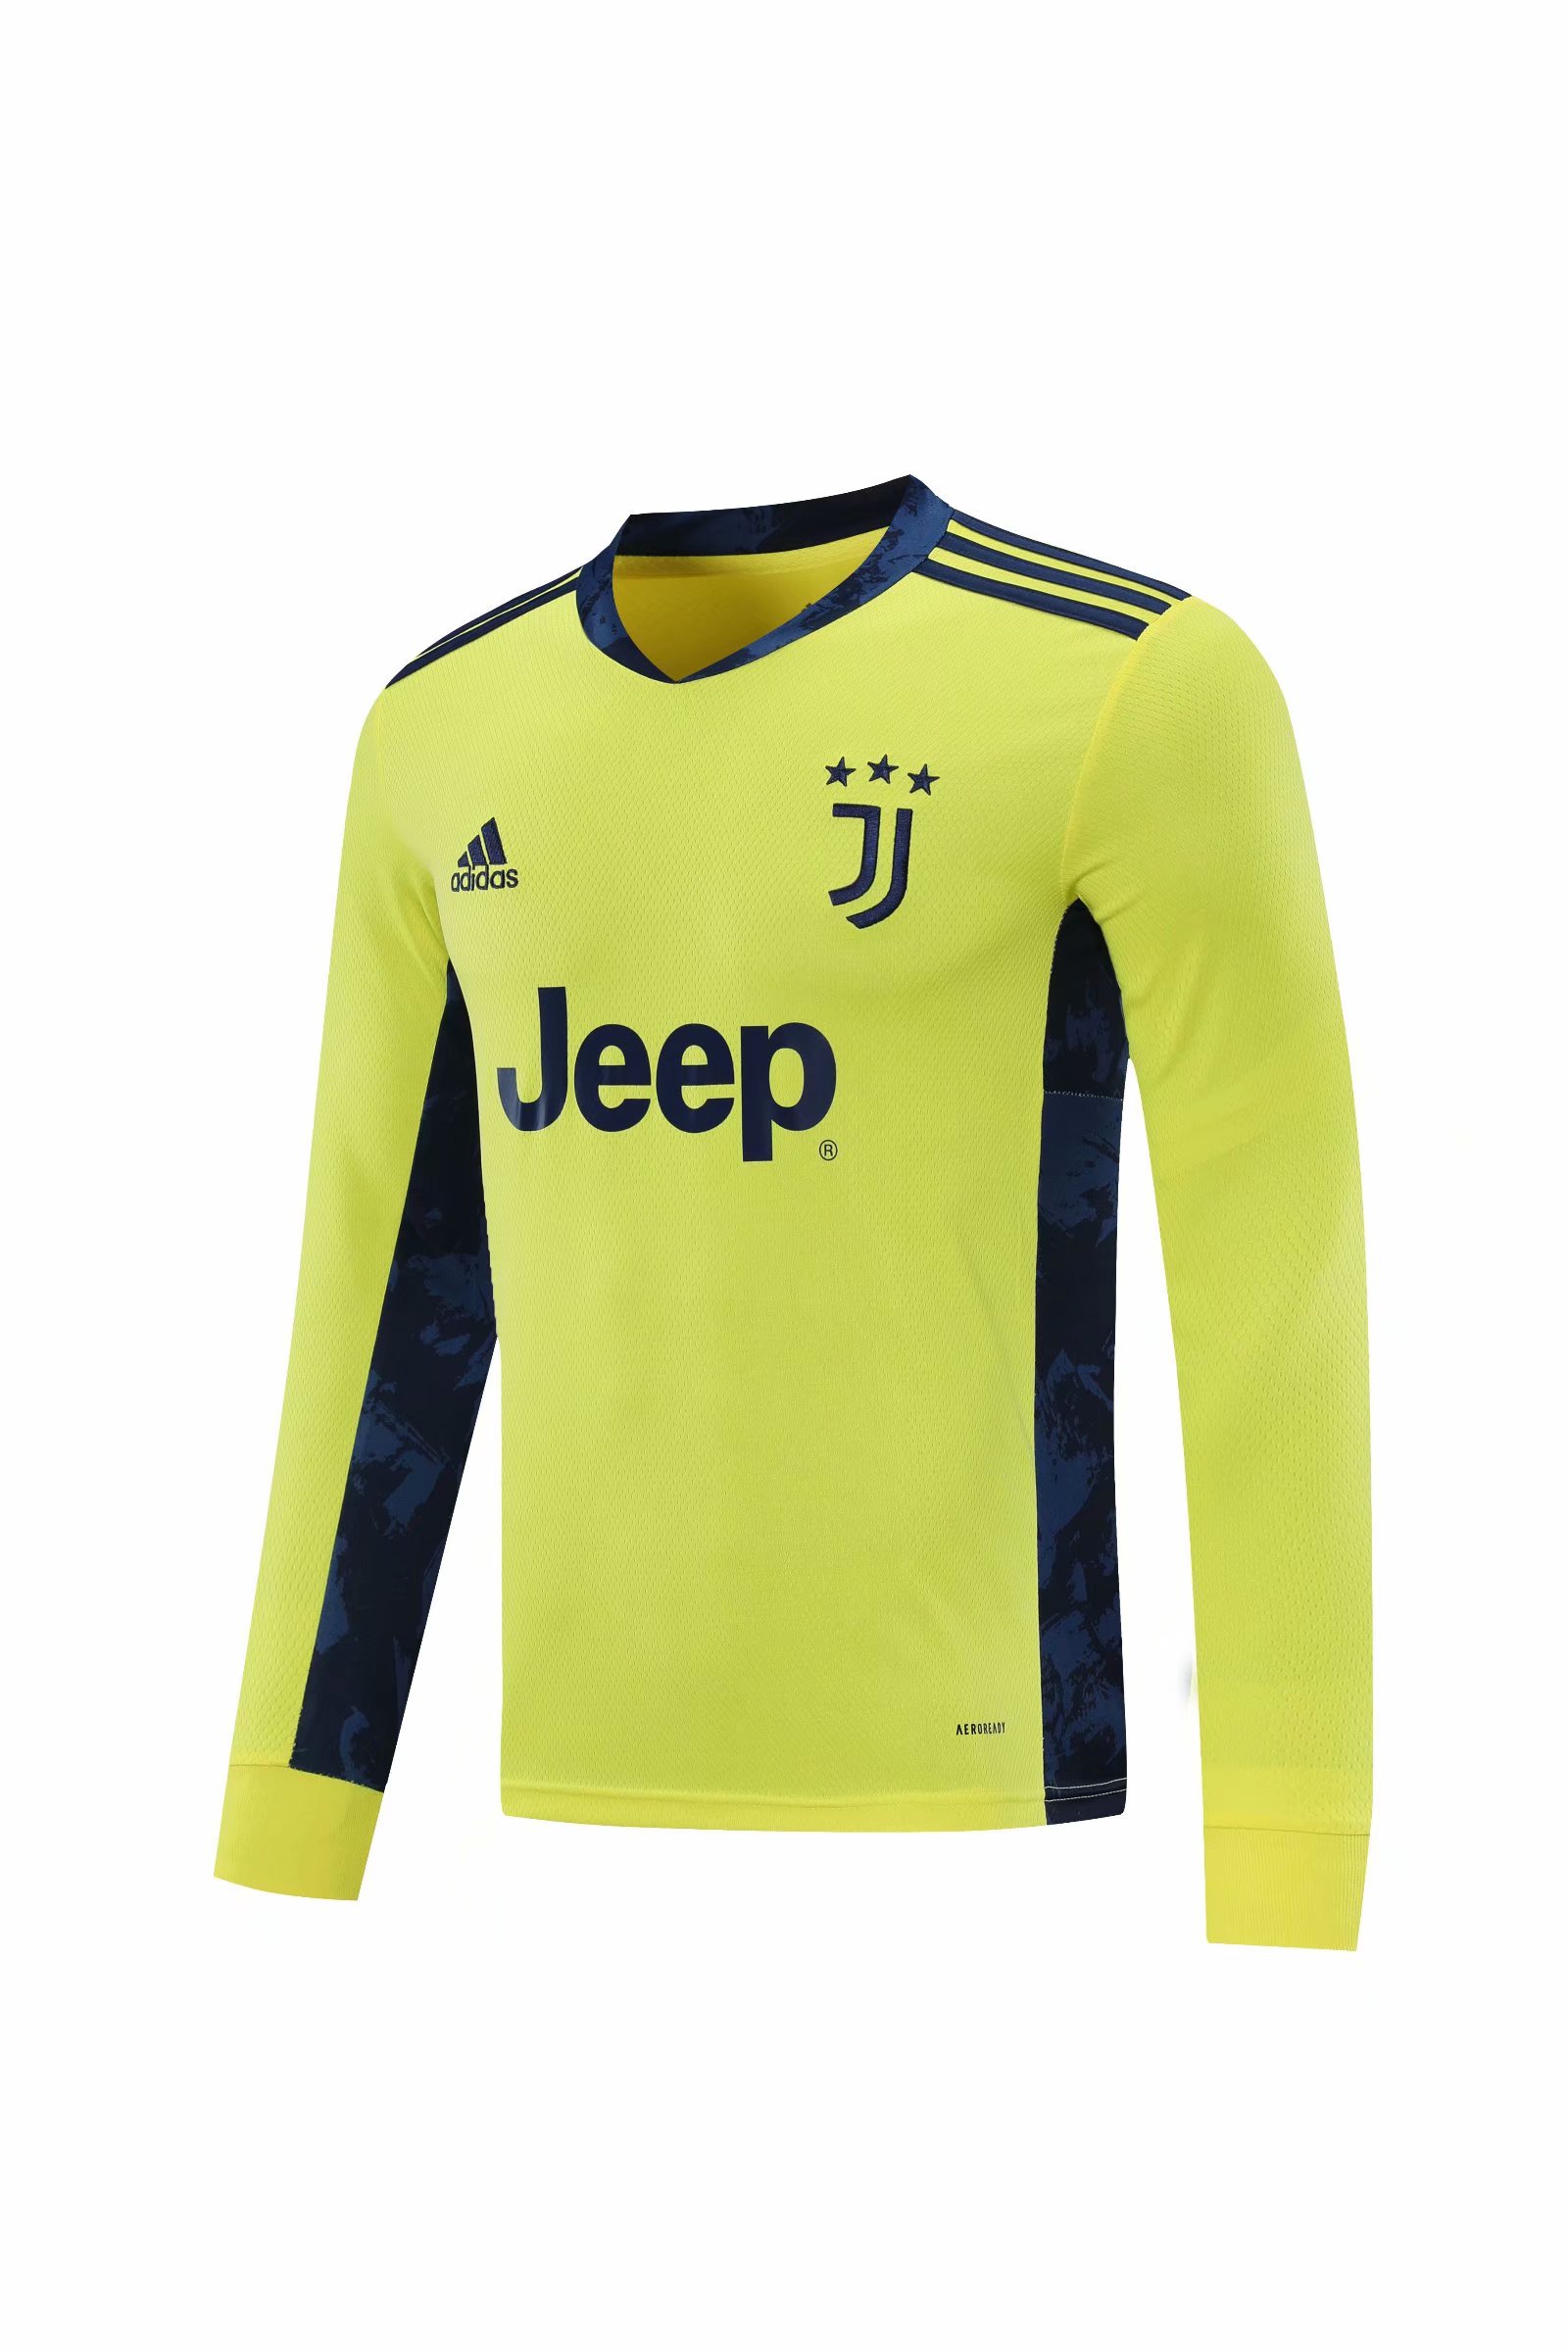 Juventus Goalkeeper Long sleeve soccer jersey 2020-2021